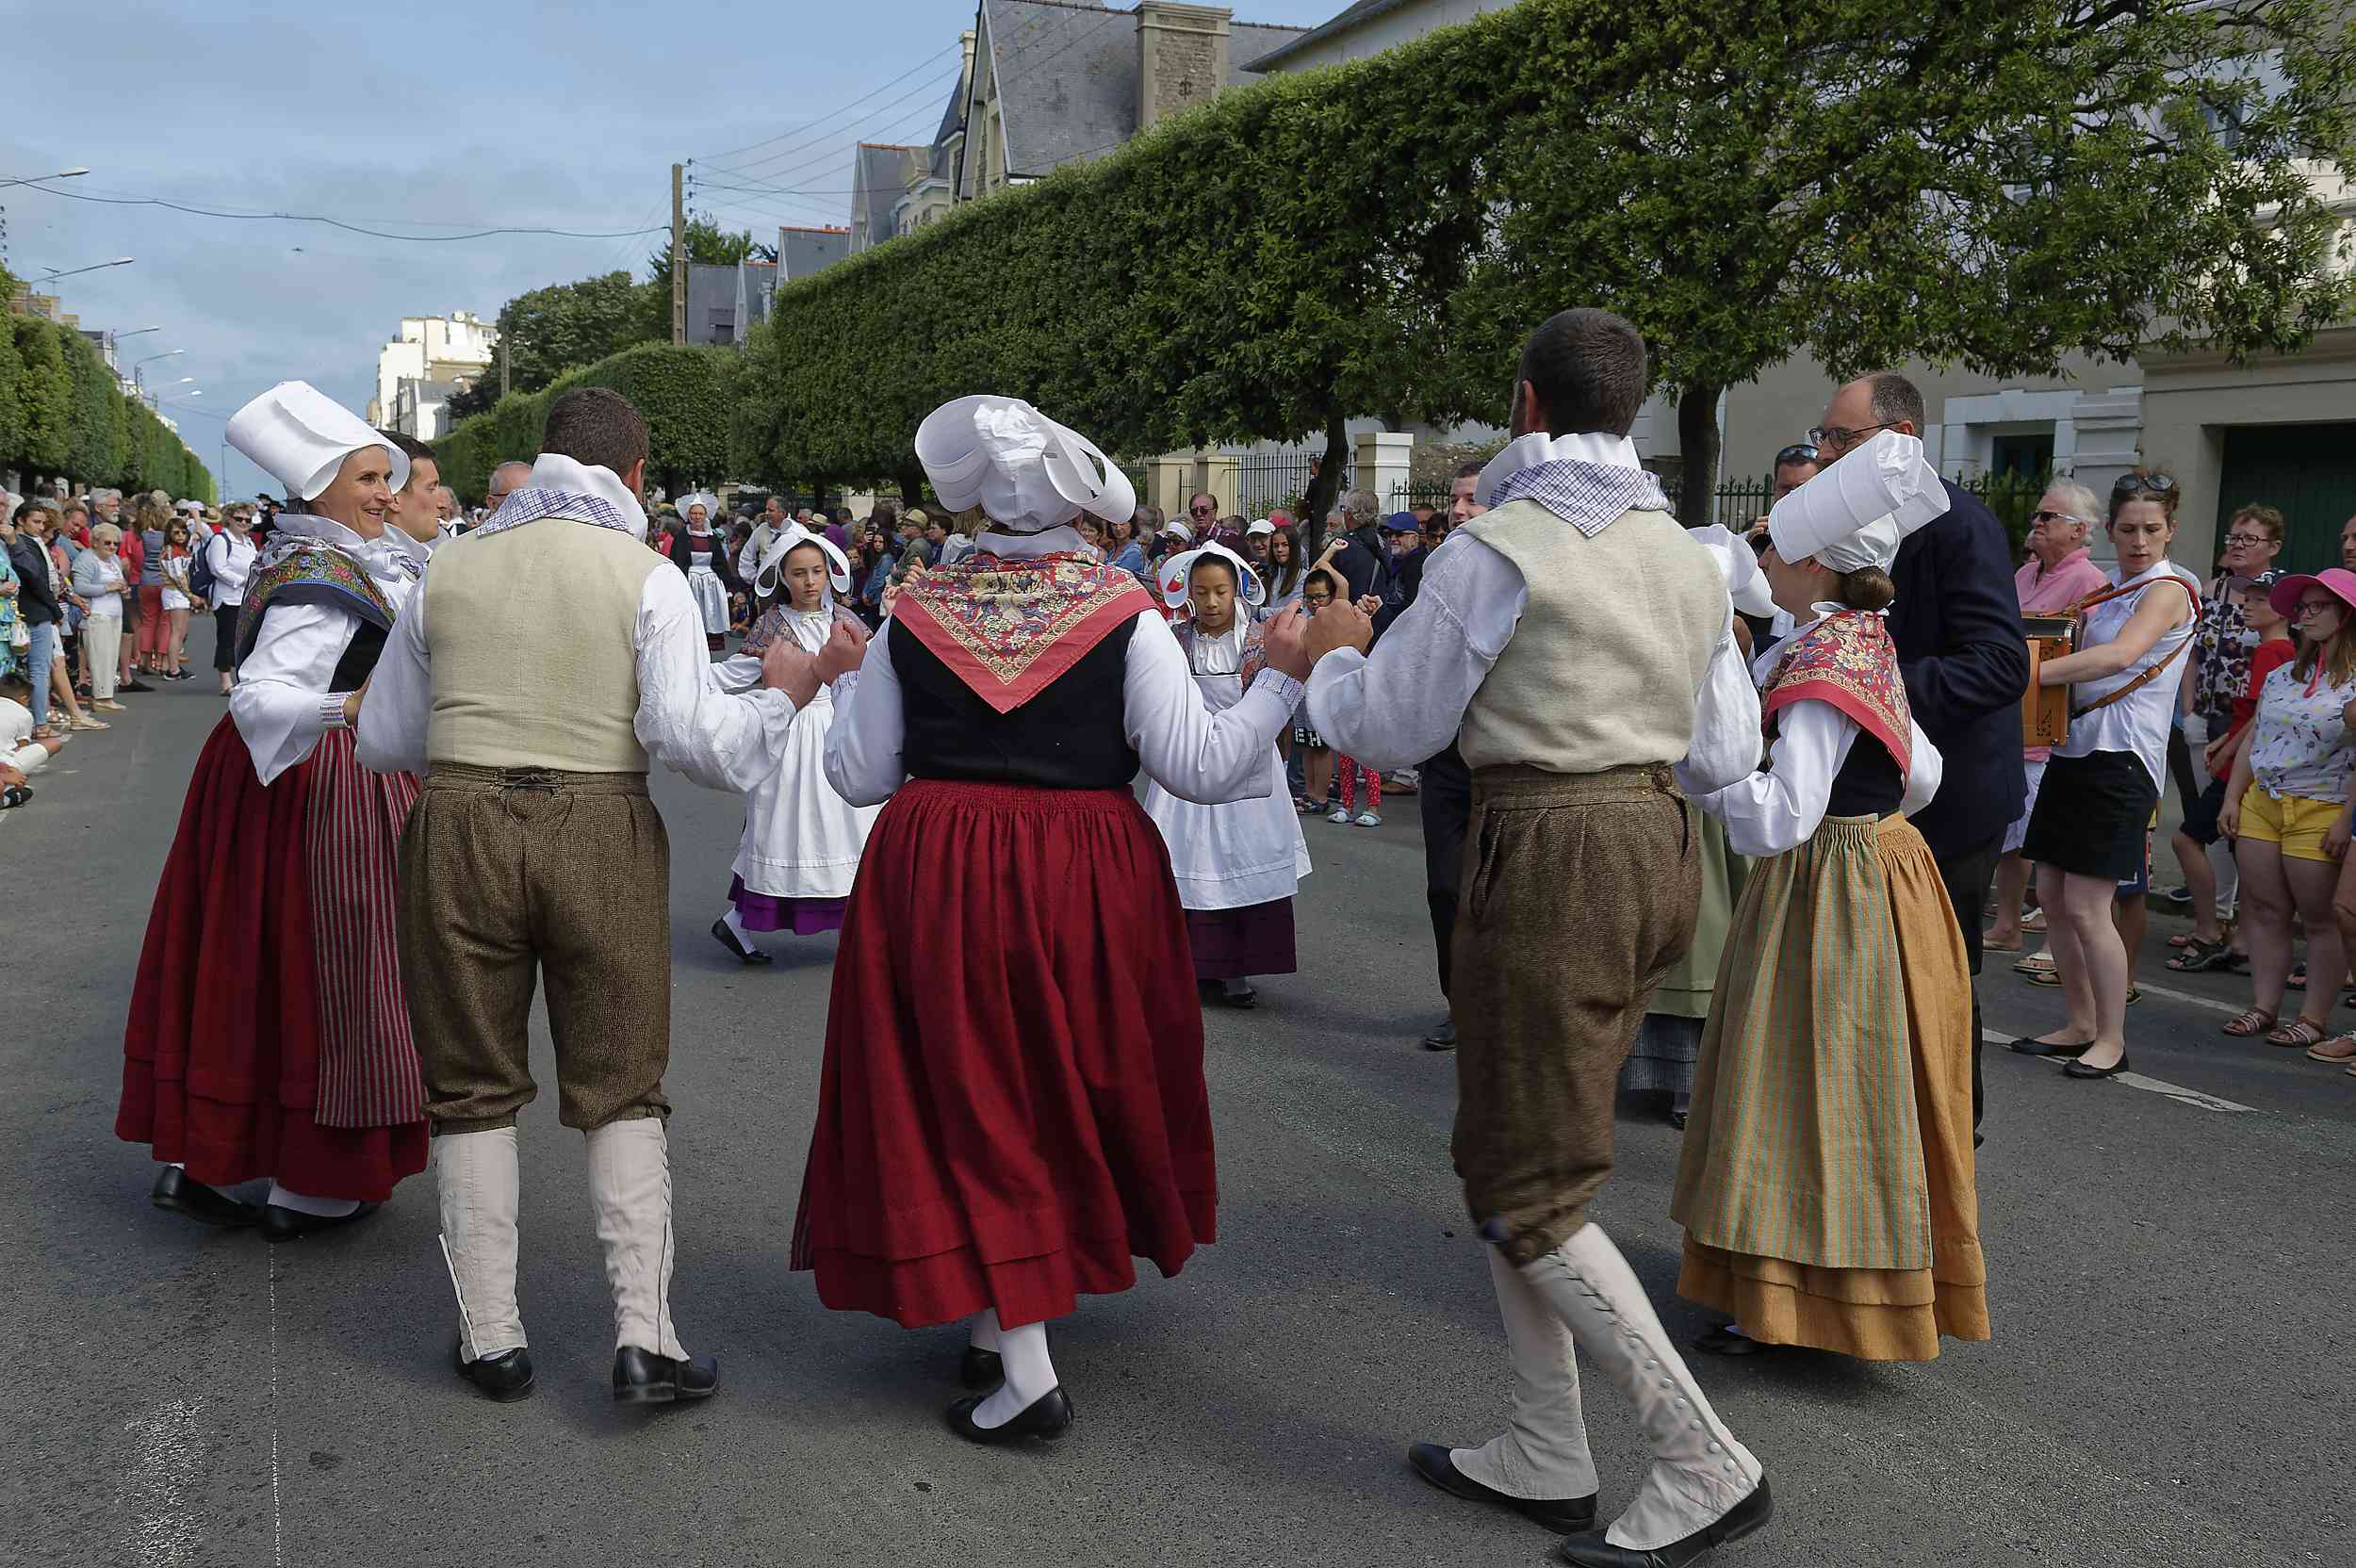 Folklores du monde 2019 Saint-Malo photo-13851